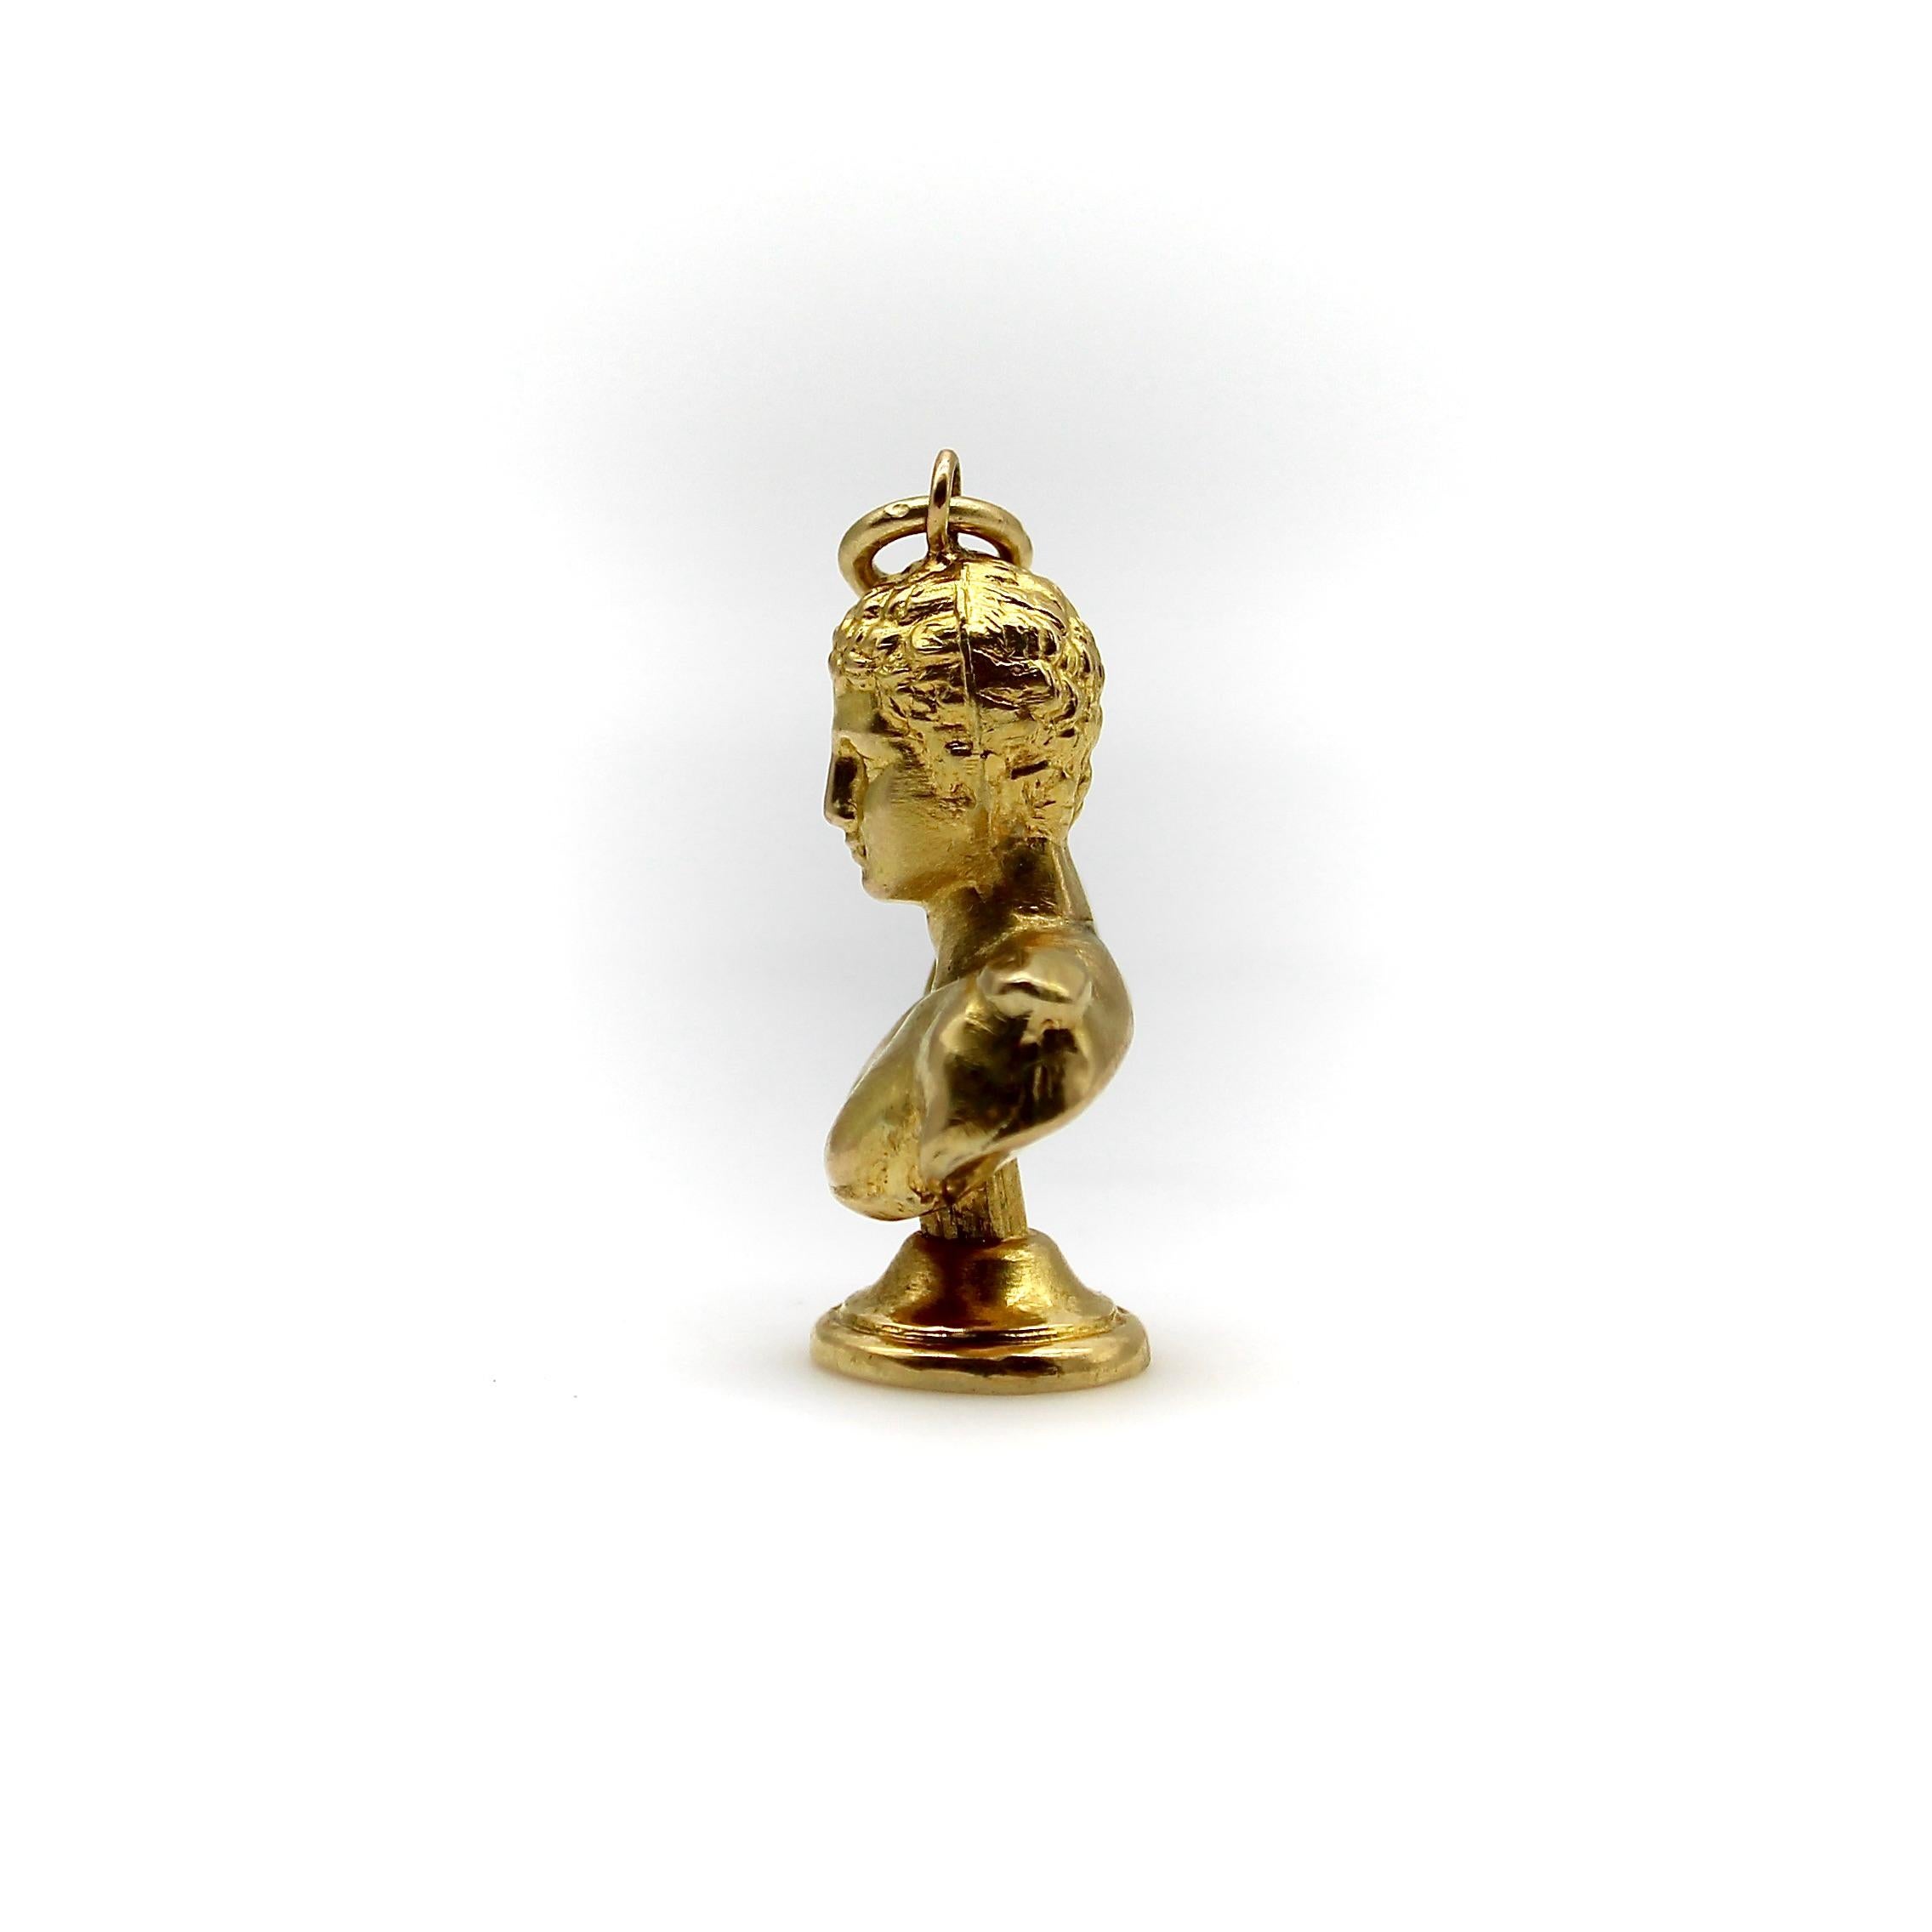 Modern Vintage 18K Gold Hermes of Olympia Pendant 